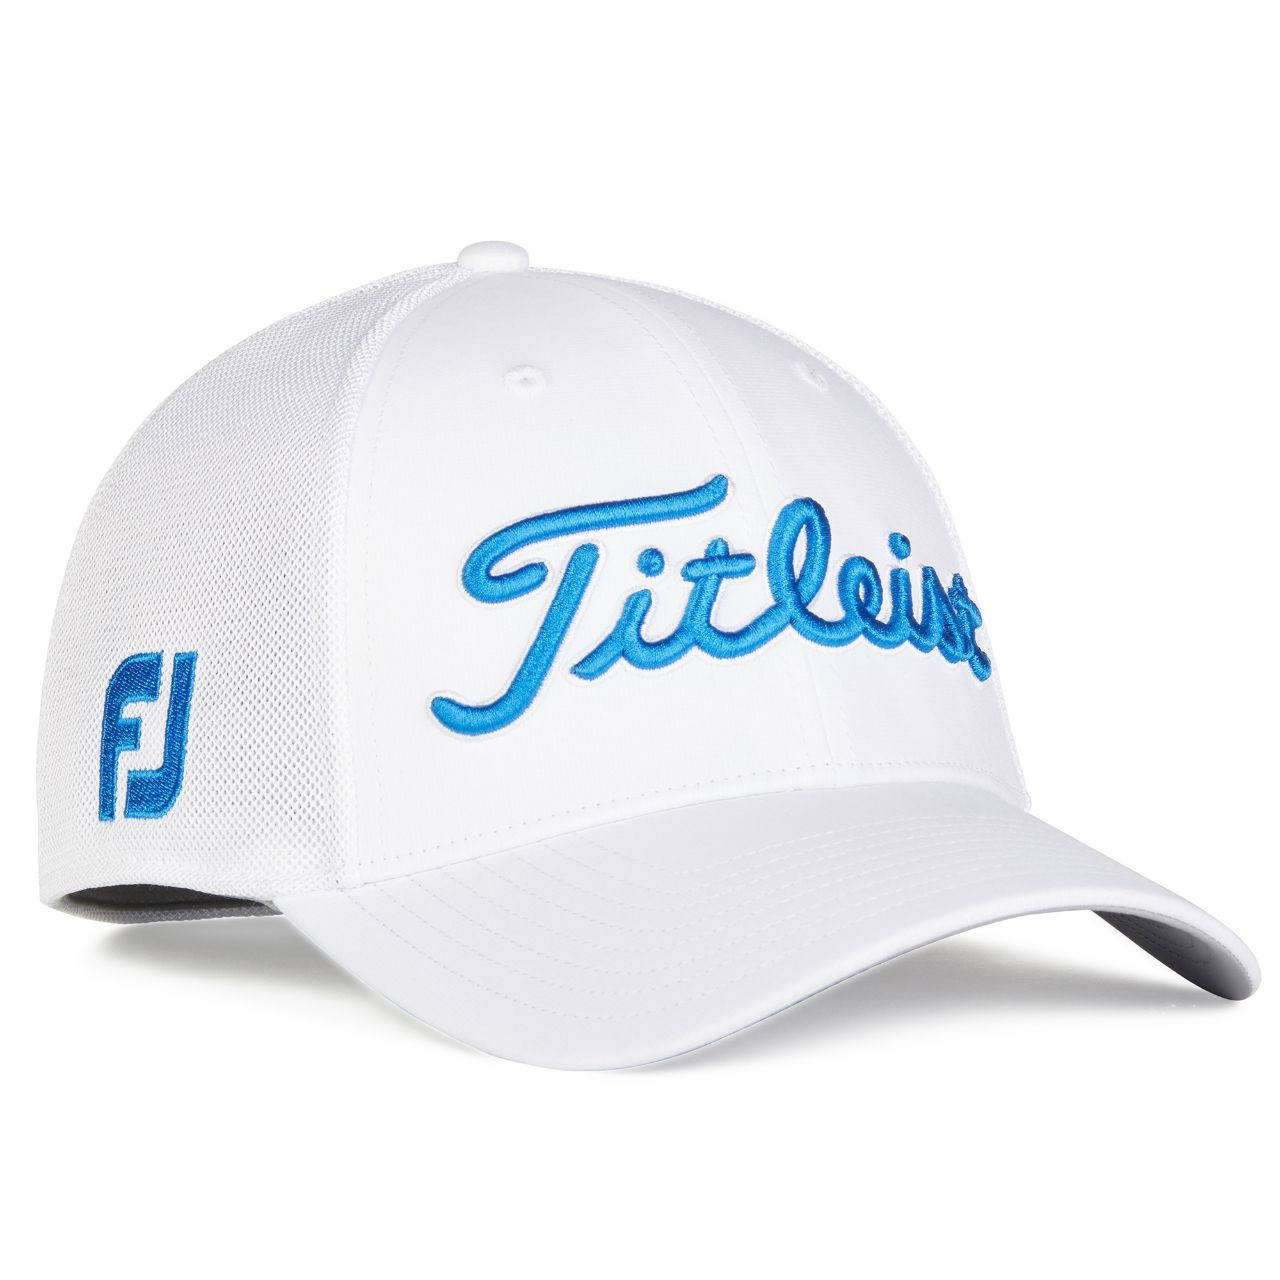 Titleist Golf Tour Sports Mesh Cap White Collection